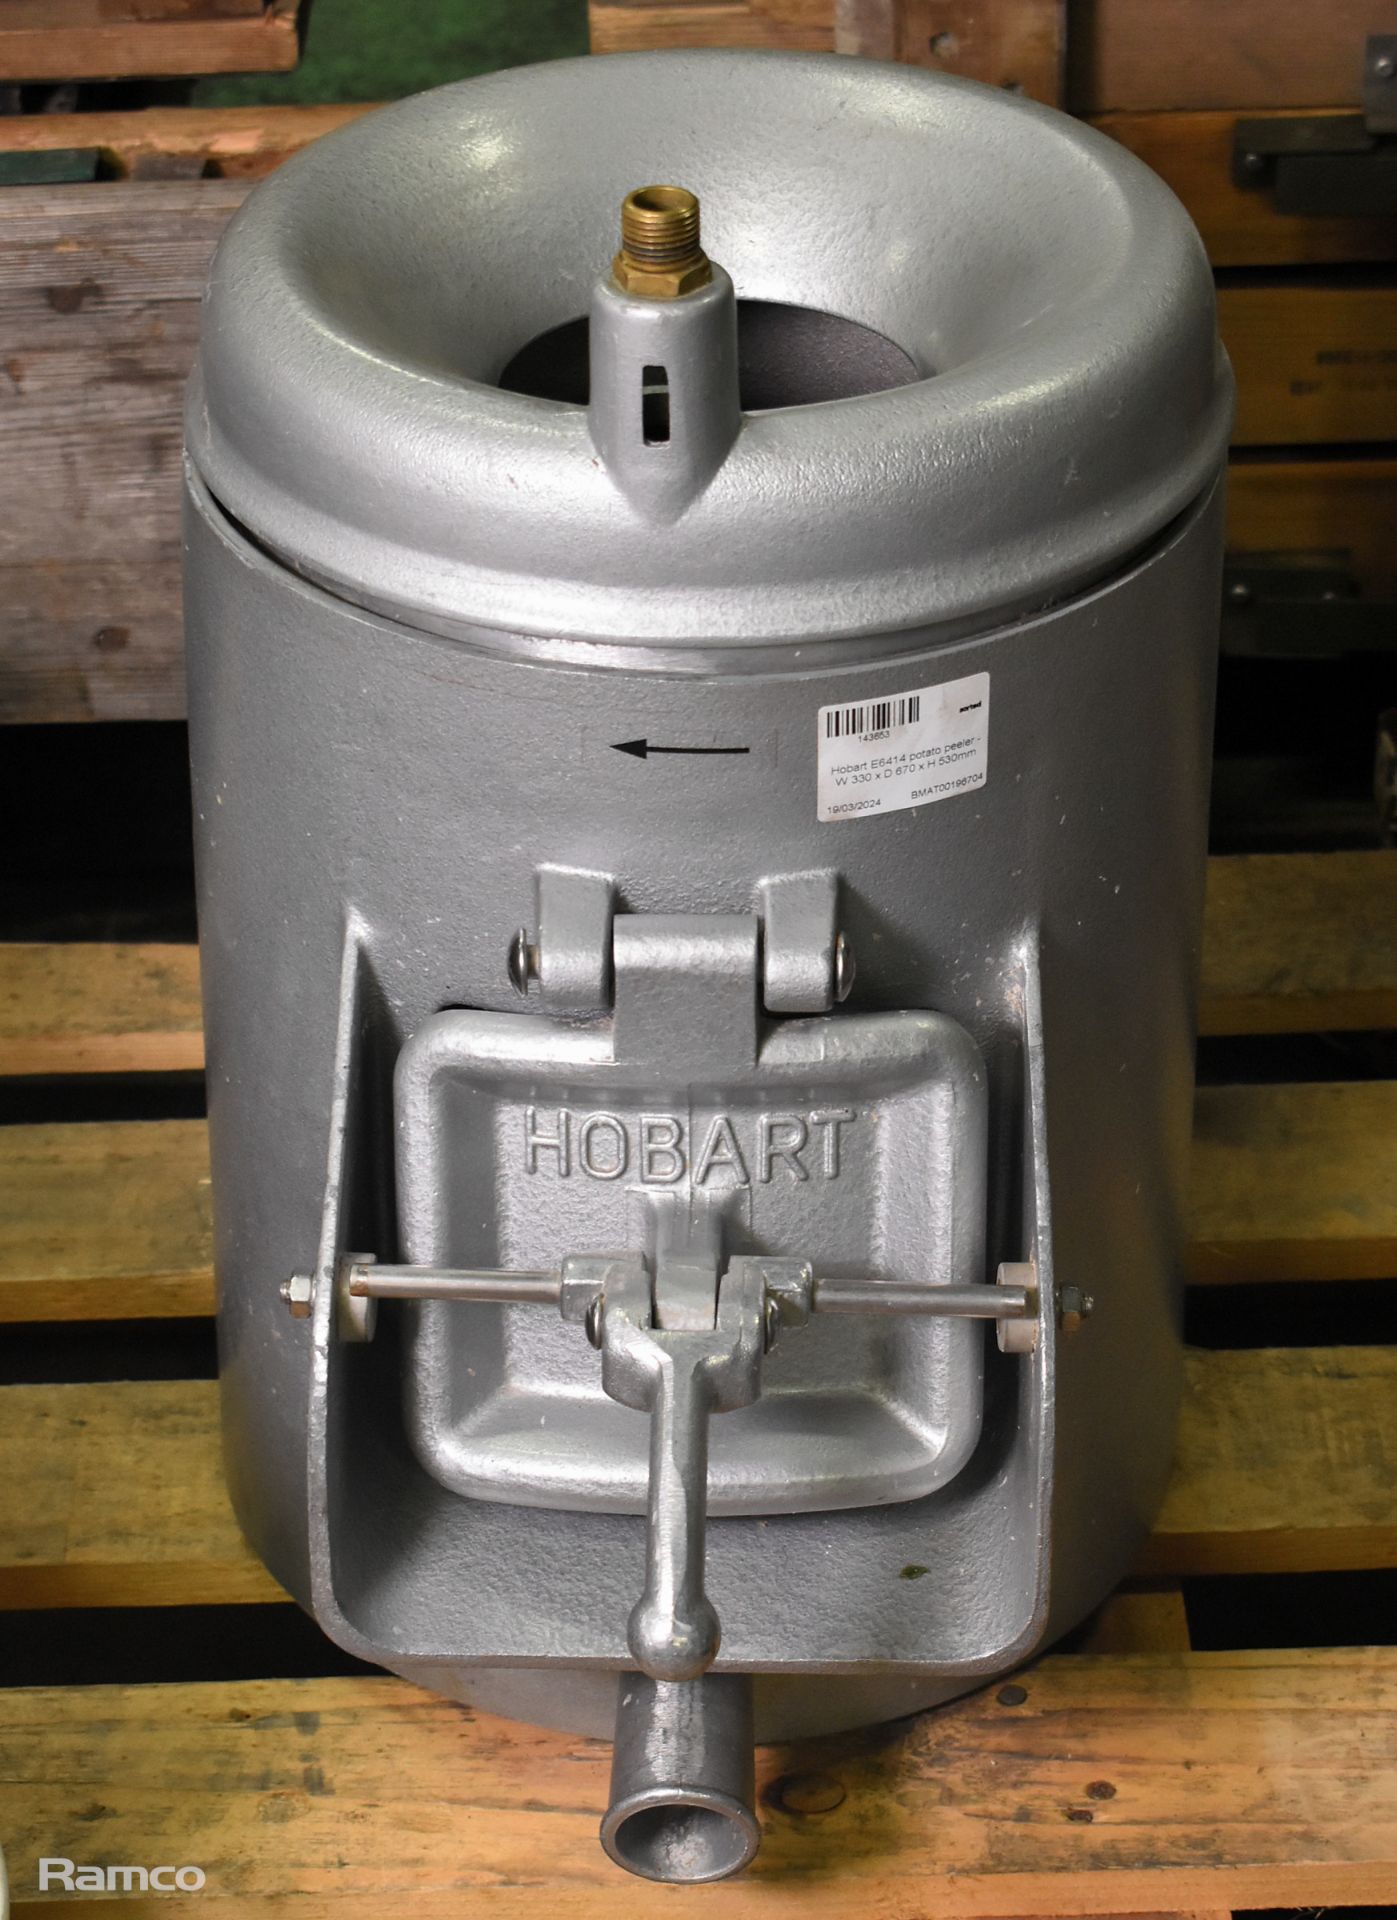 Hobart E6414 potato peeler - W 330 x D 670 x H 530mm - Image 5 of 7